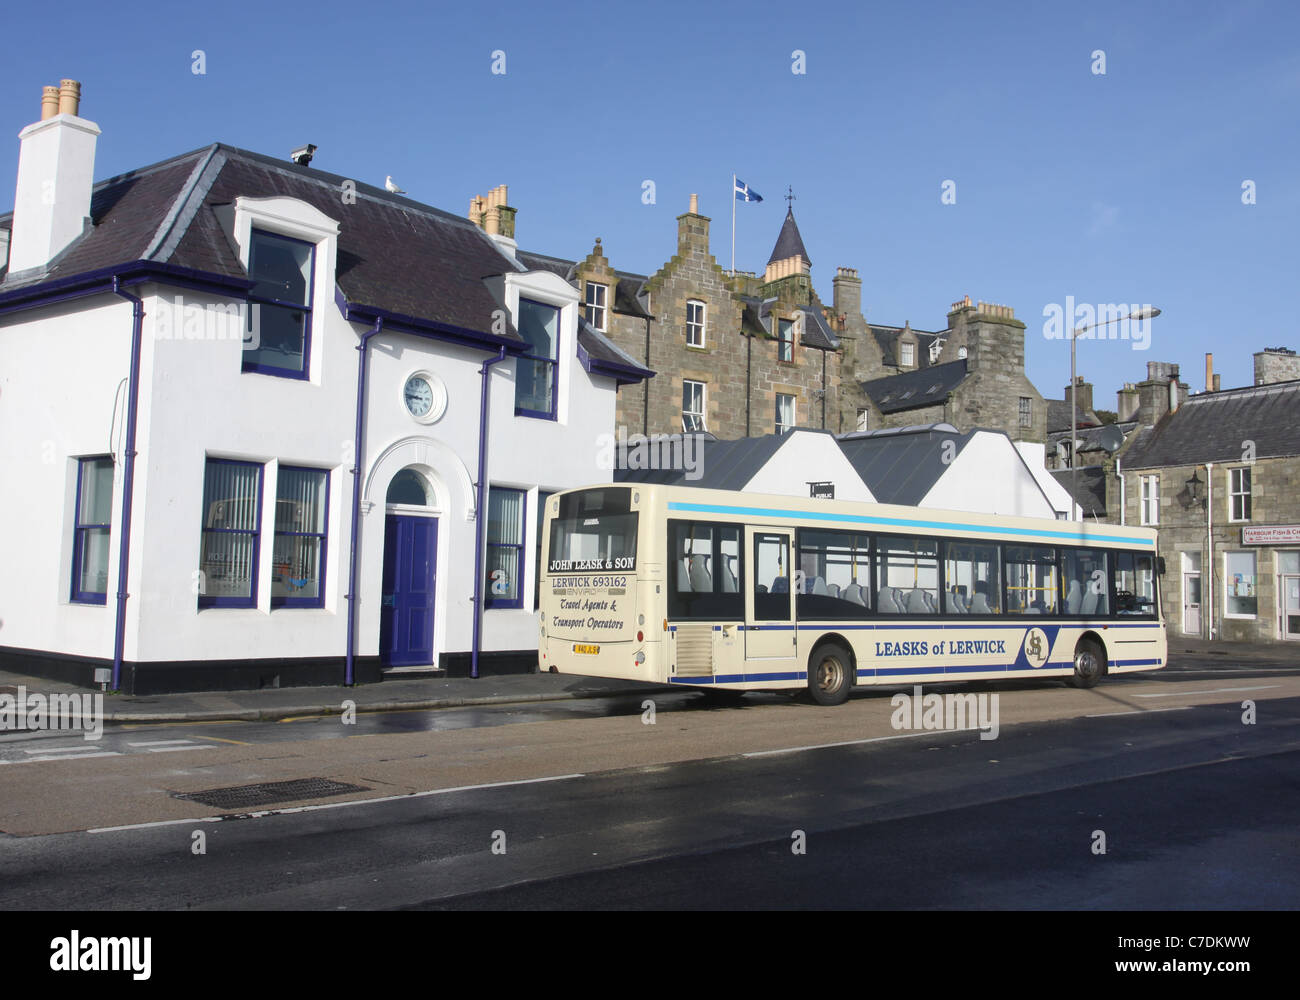 Leasks of lerwick bus Shetland Islands Scotland September 2011 Stock Photo